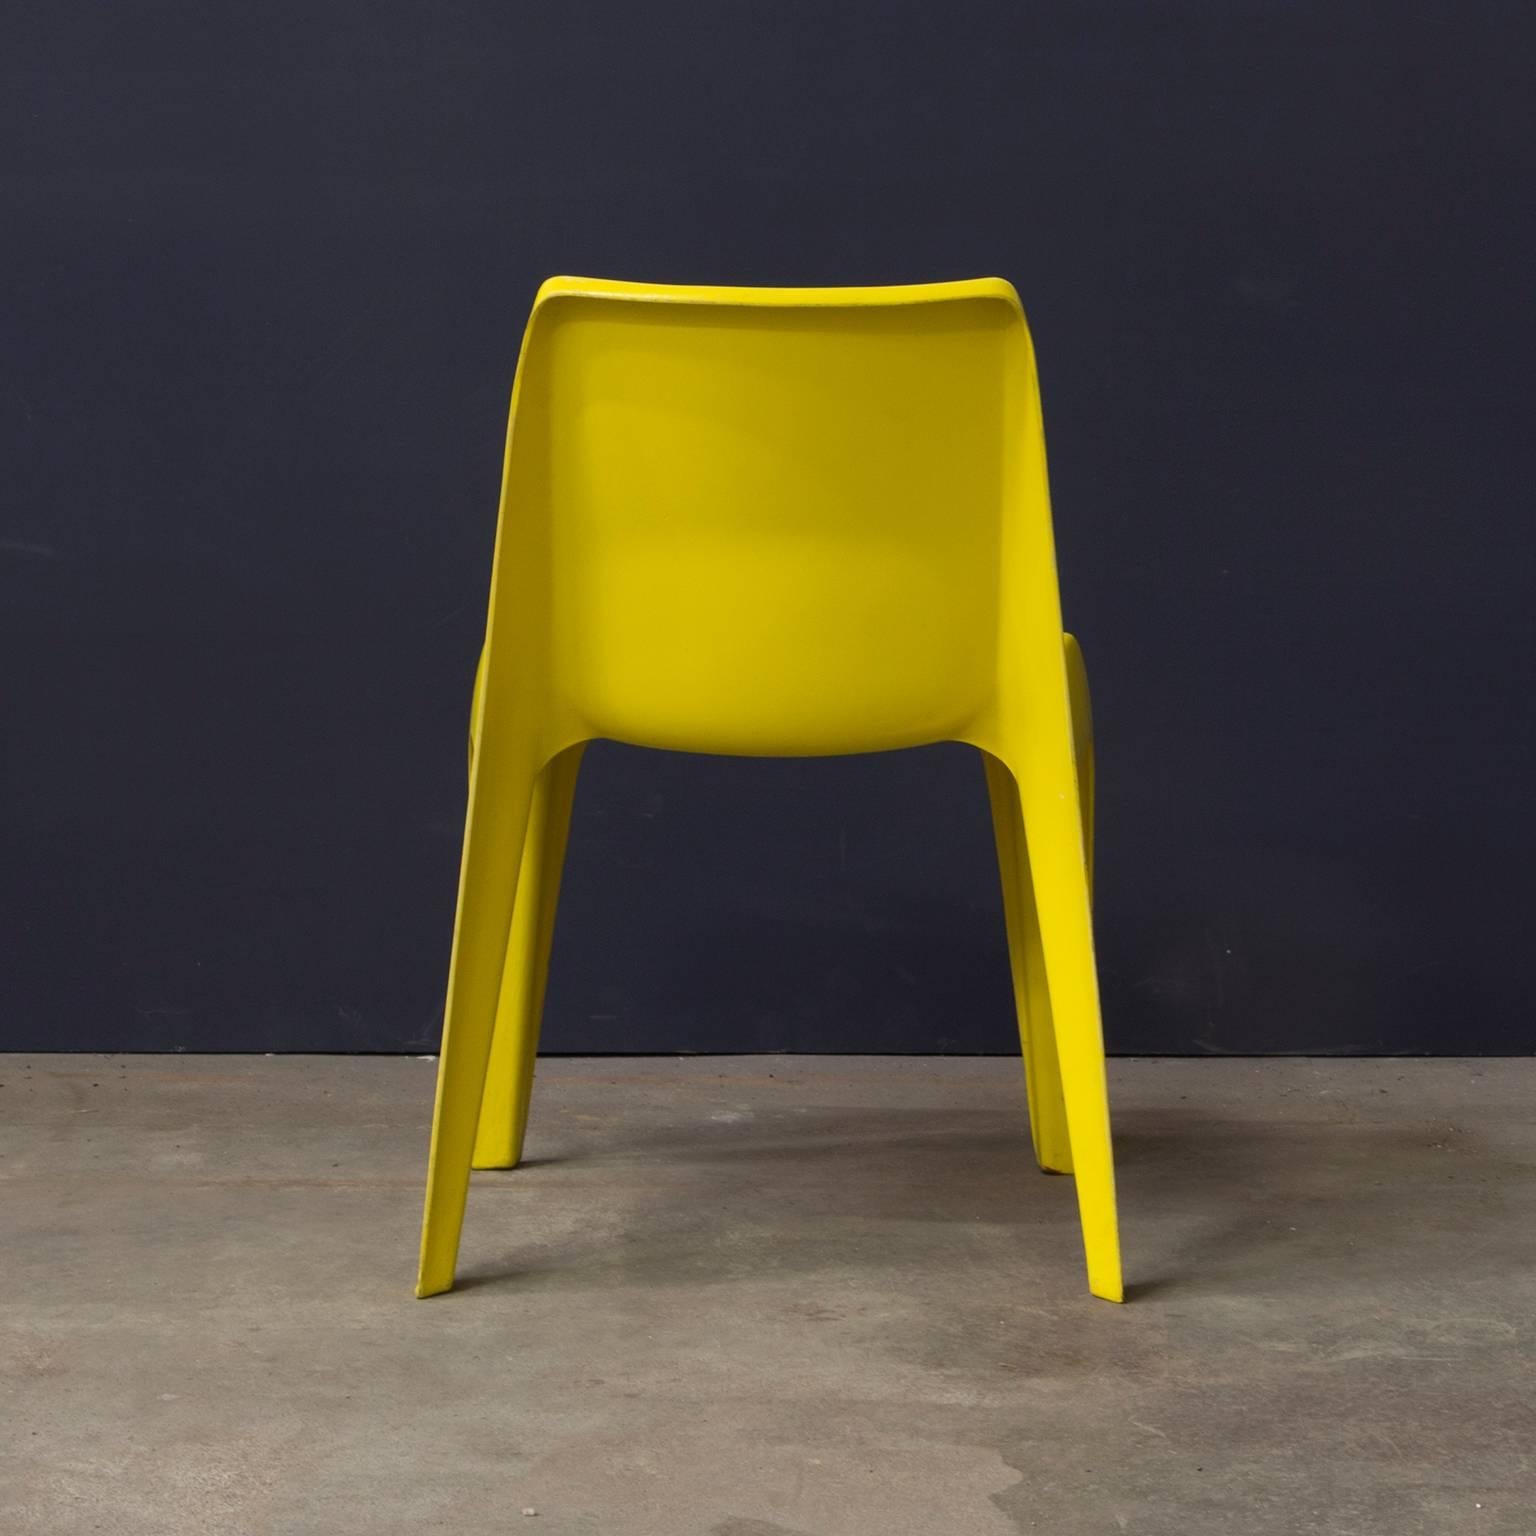 yellow plastic chair